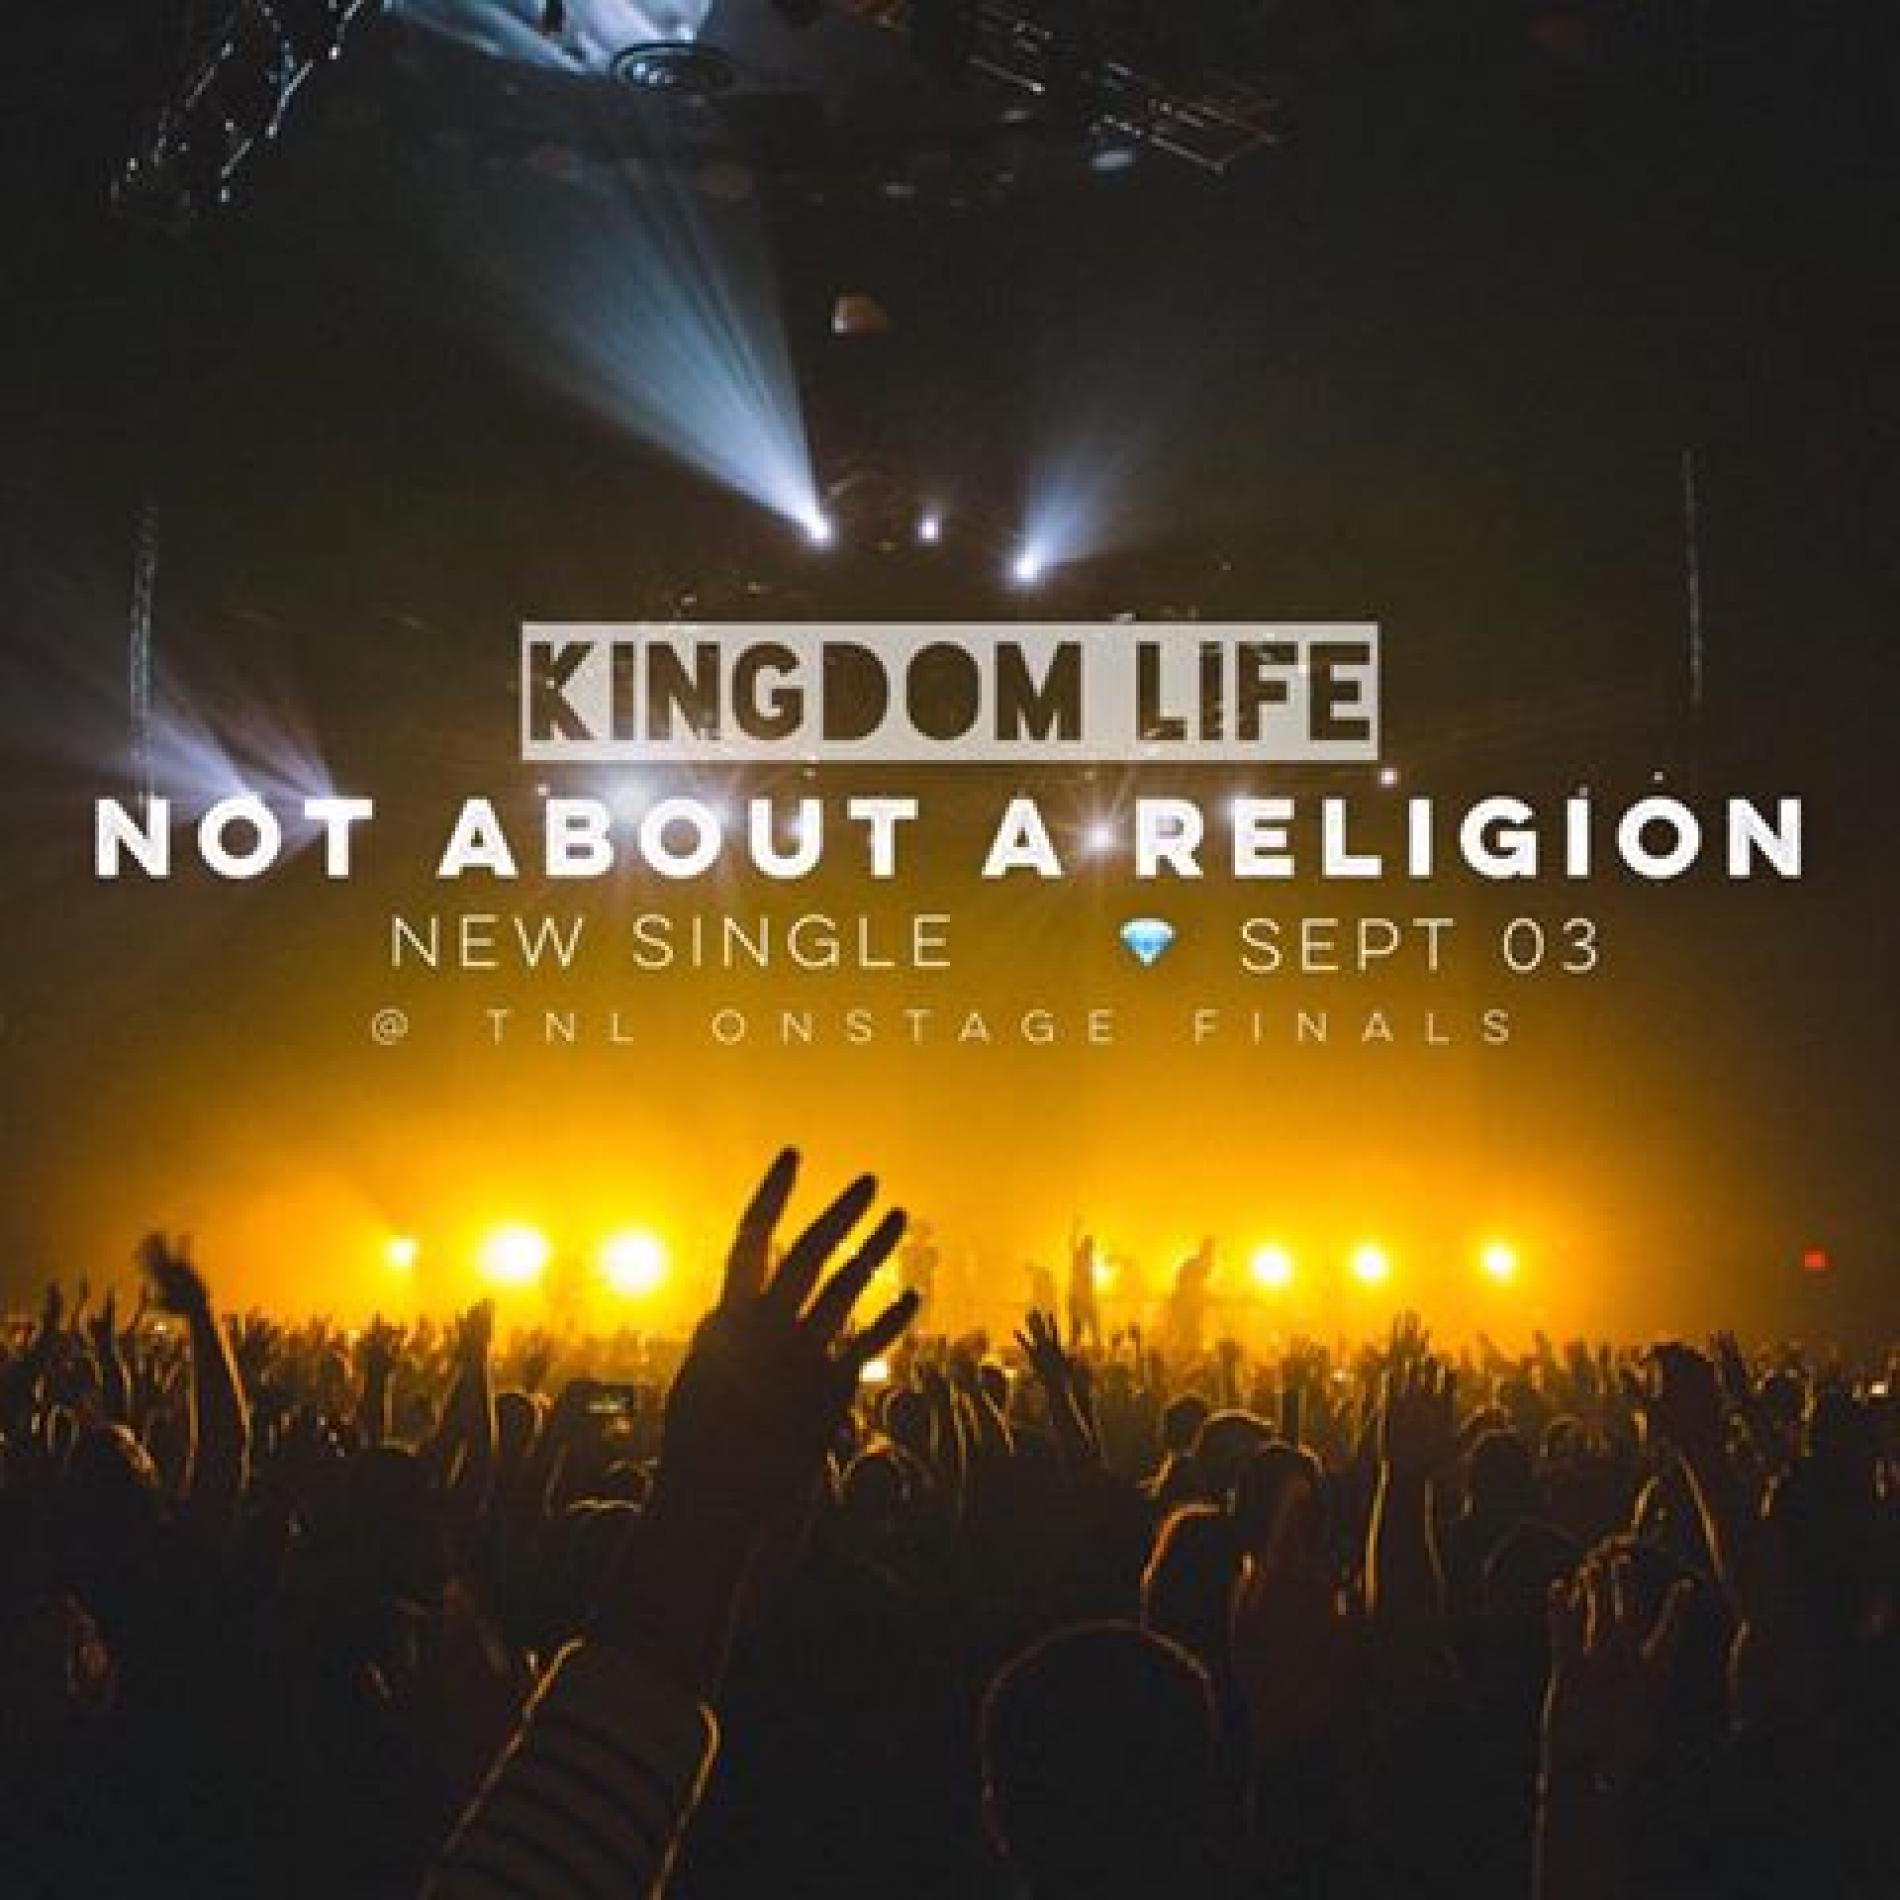 Kingdom Life To Drop A New Single Soon